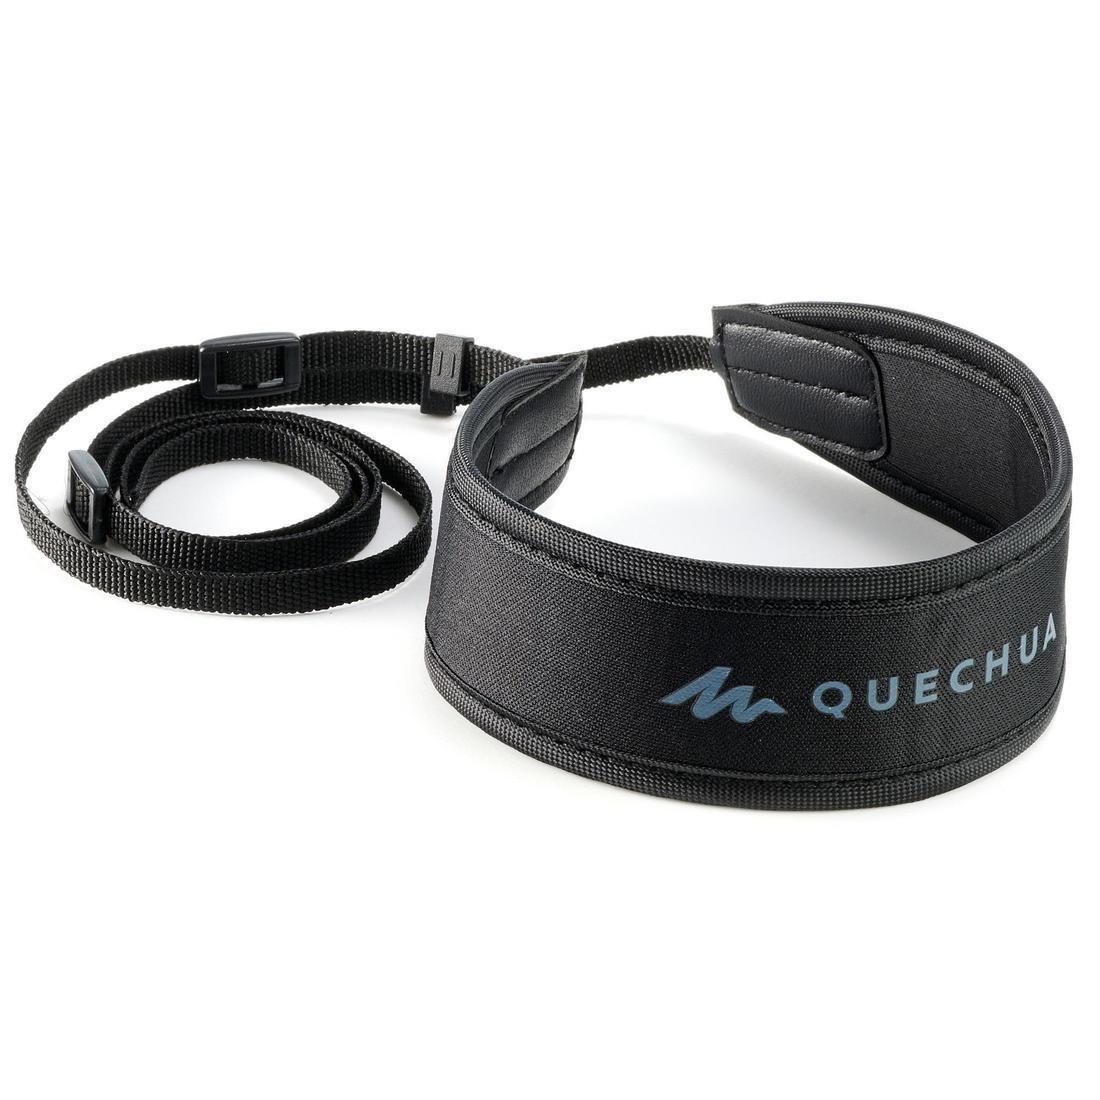 QUECHUA - Adult Fixed Focus Hiking Binoculars, MH B140, x10 Magnification, Blue